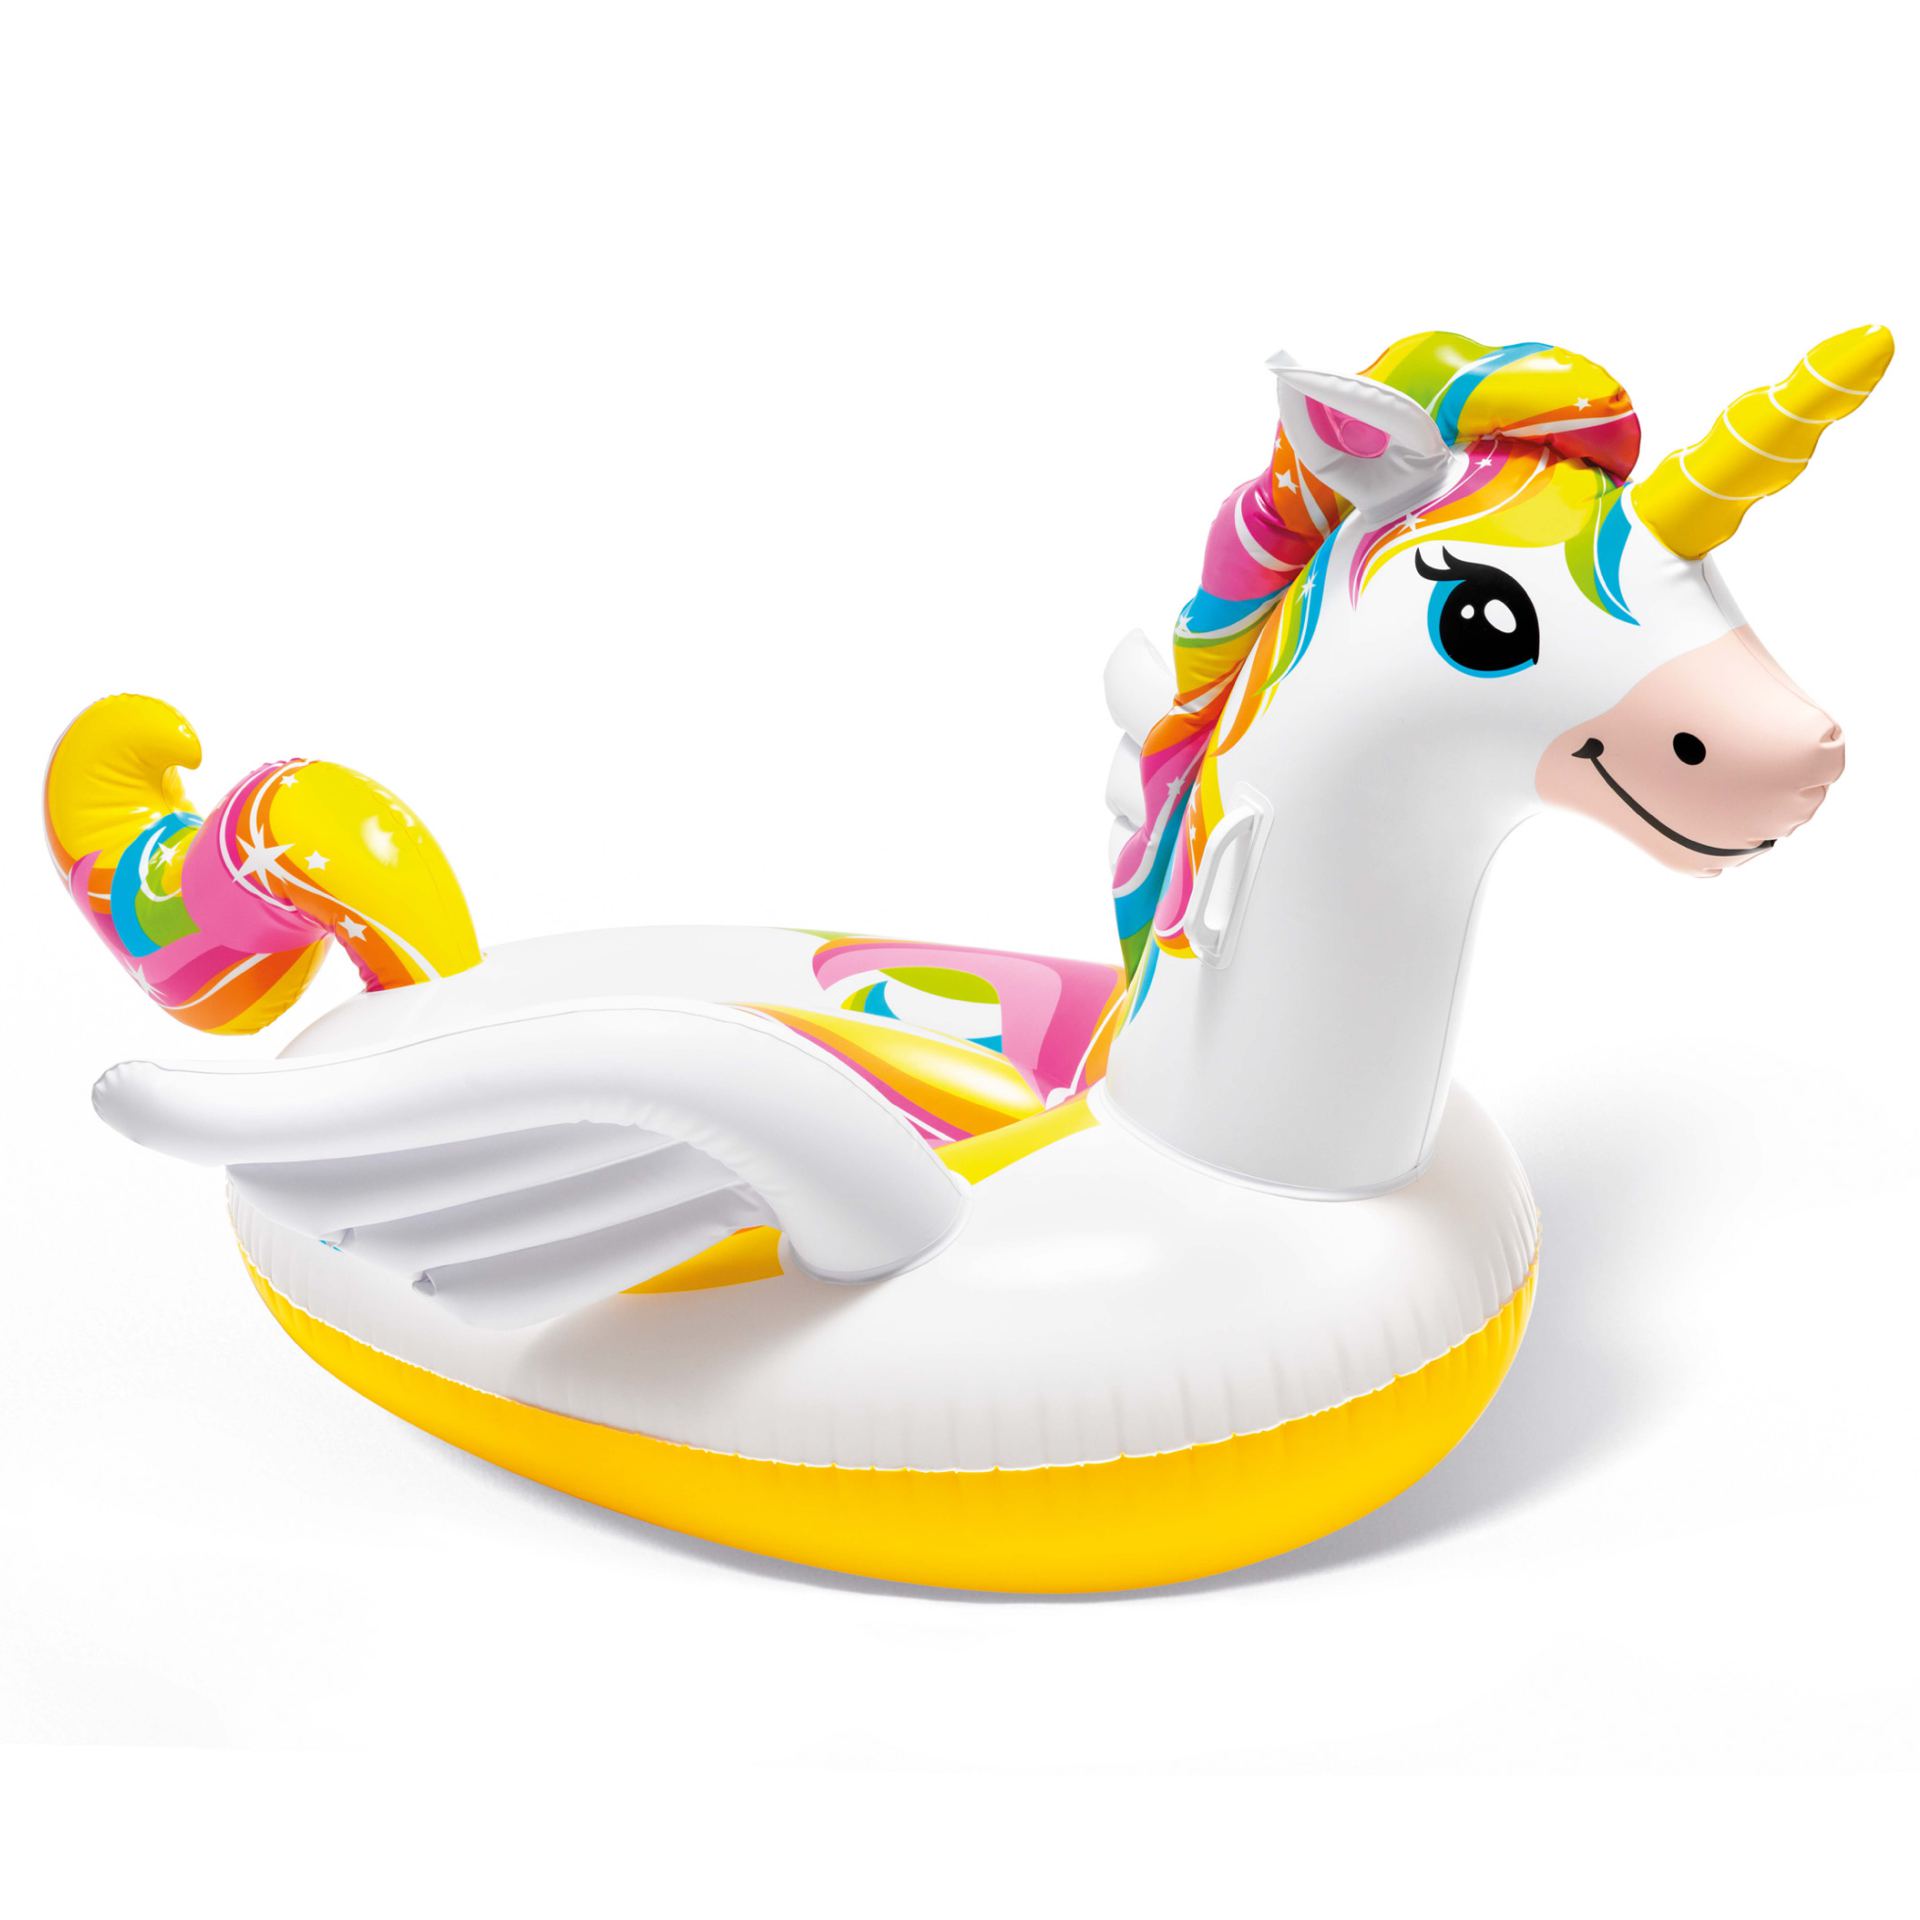 Intex enchanted unicorn ride-on